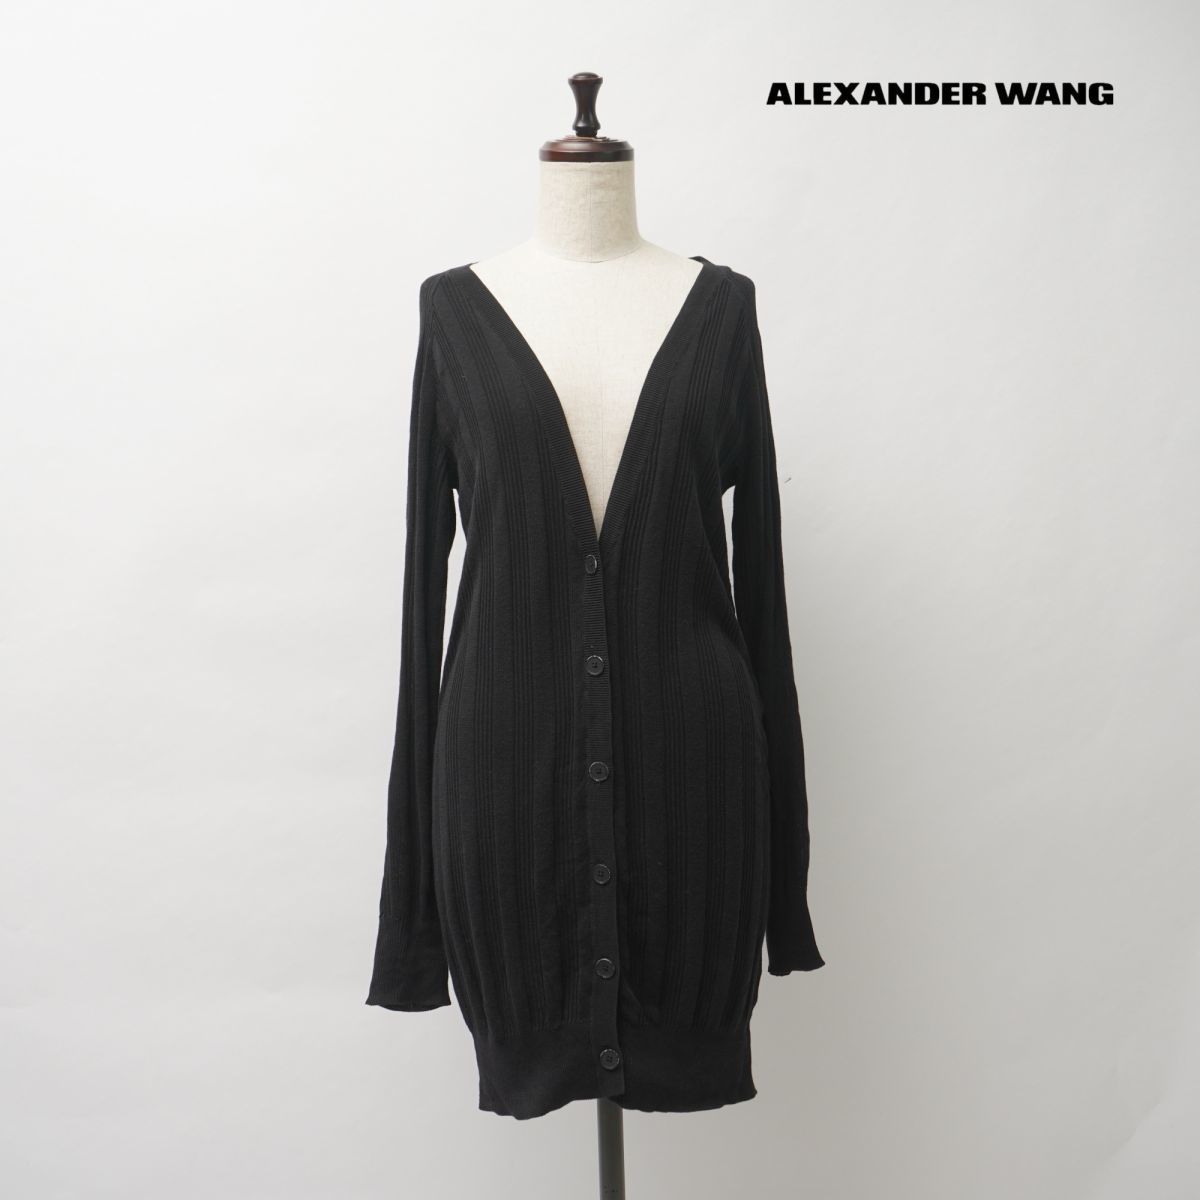 alexanderwang アレキサンダーワング ロングニットカーディガン ストレッチ素材 トップス レディース 黒 ブラック サイズxs*GC584